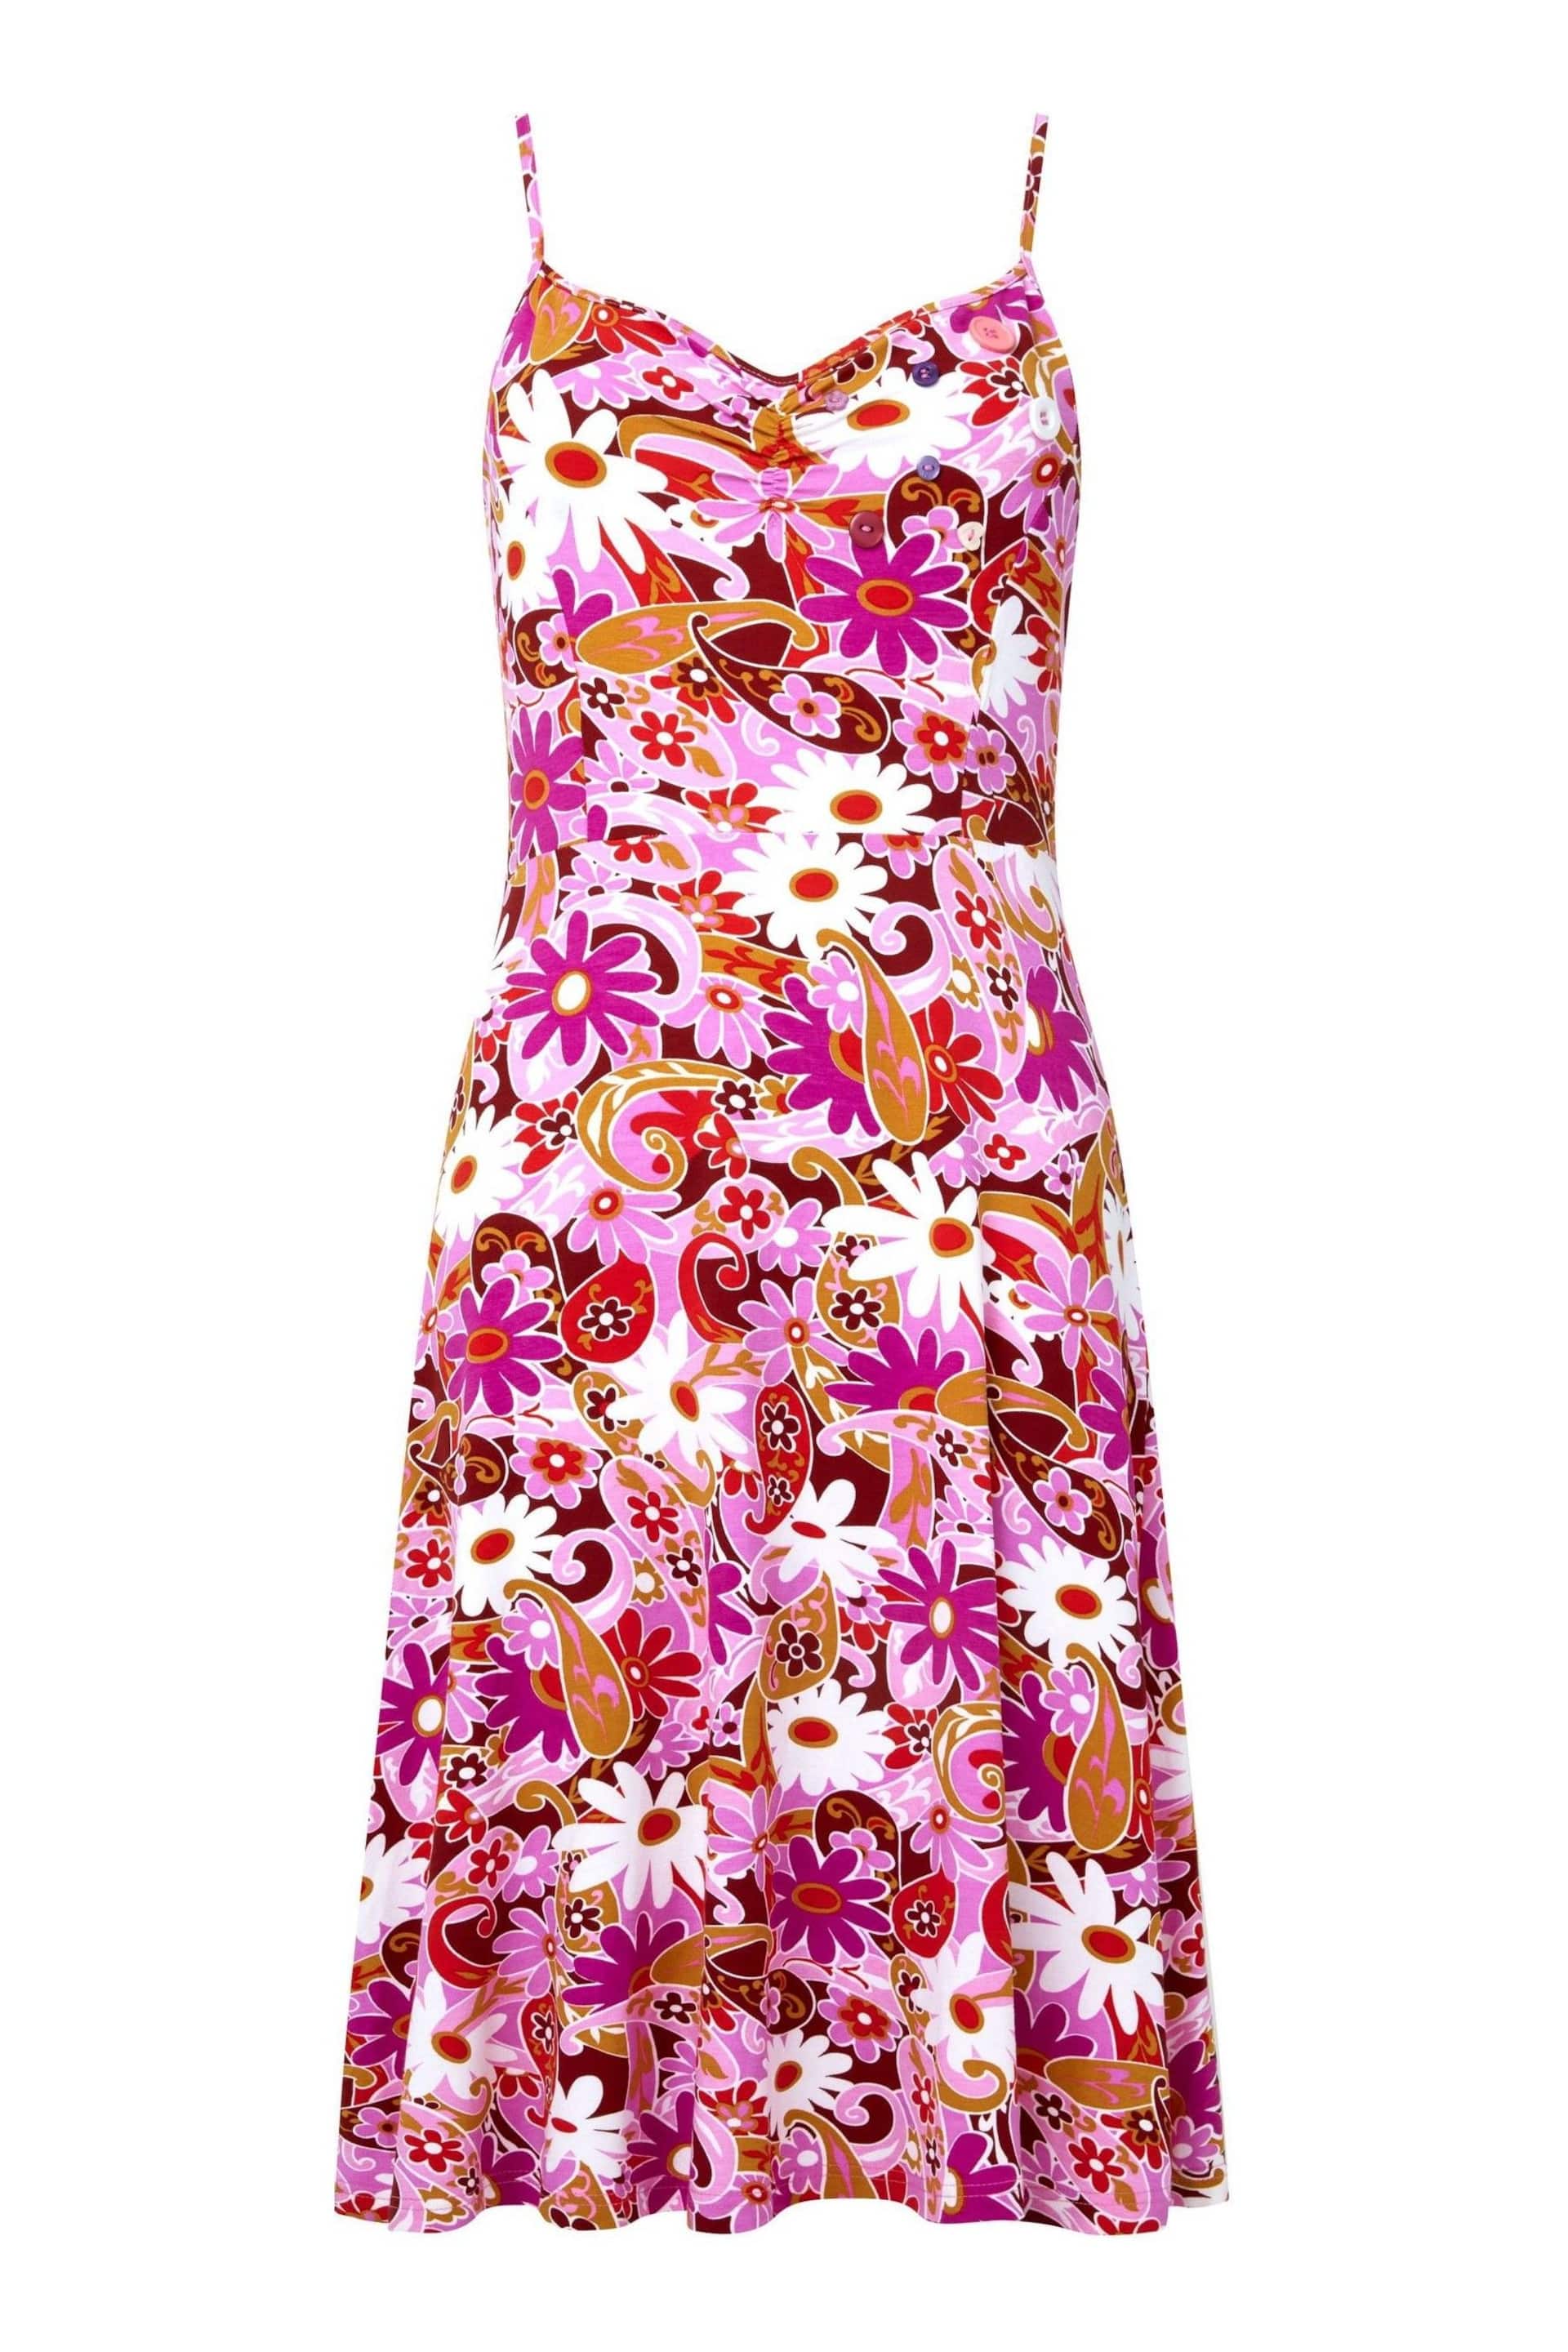 Joe Browns Pink Retro Flower Power Print Jersey Sun Dress - Image 6 of 6